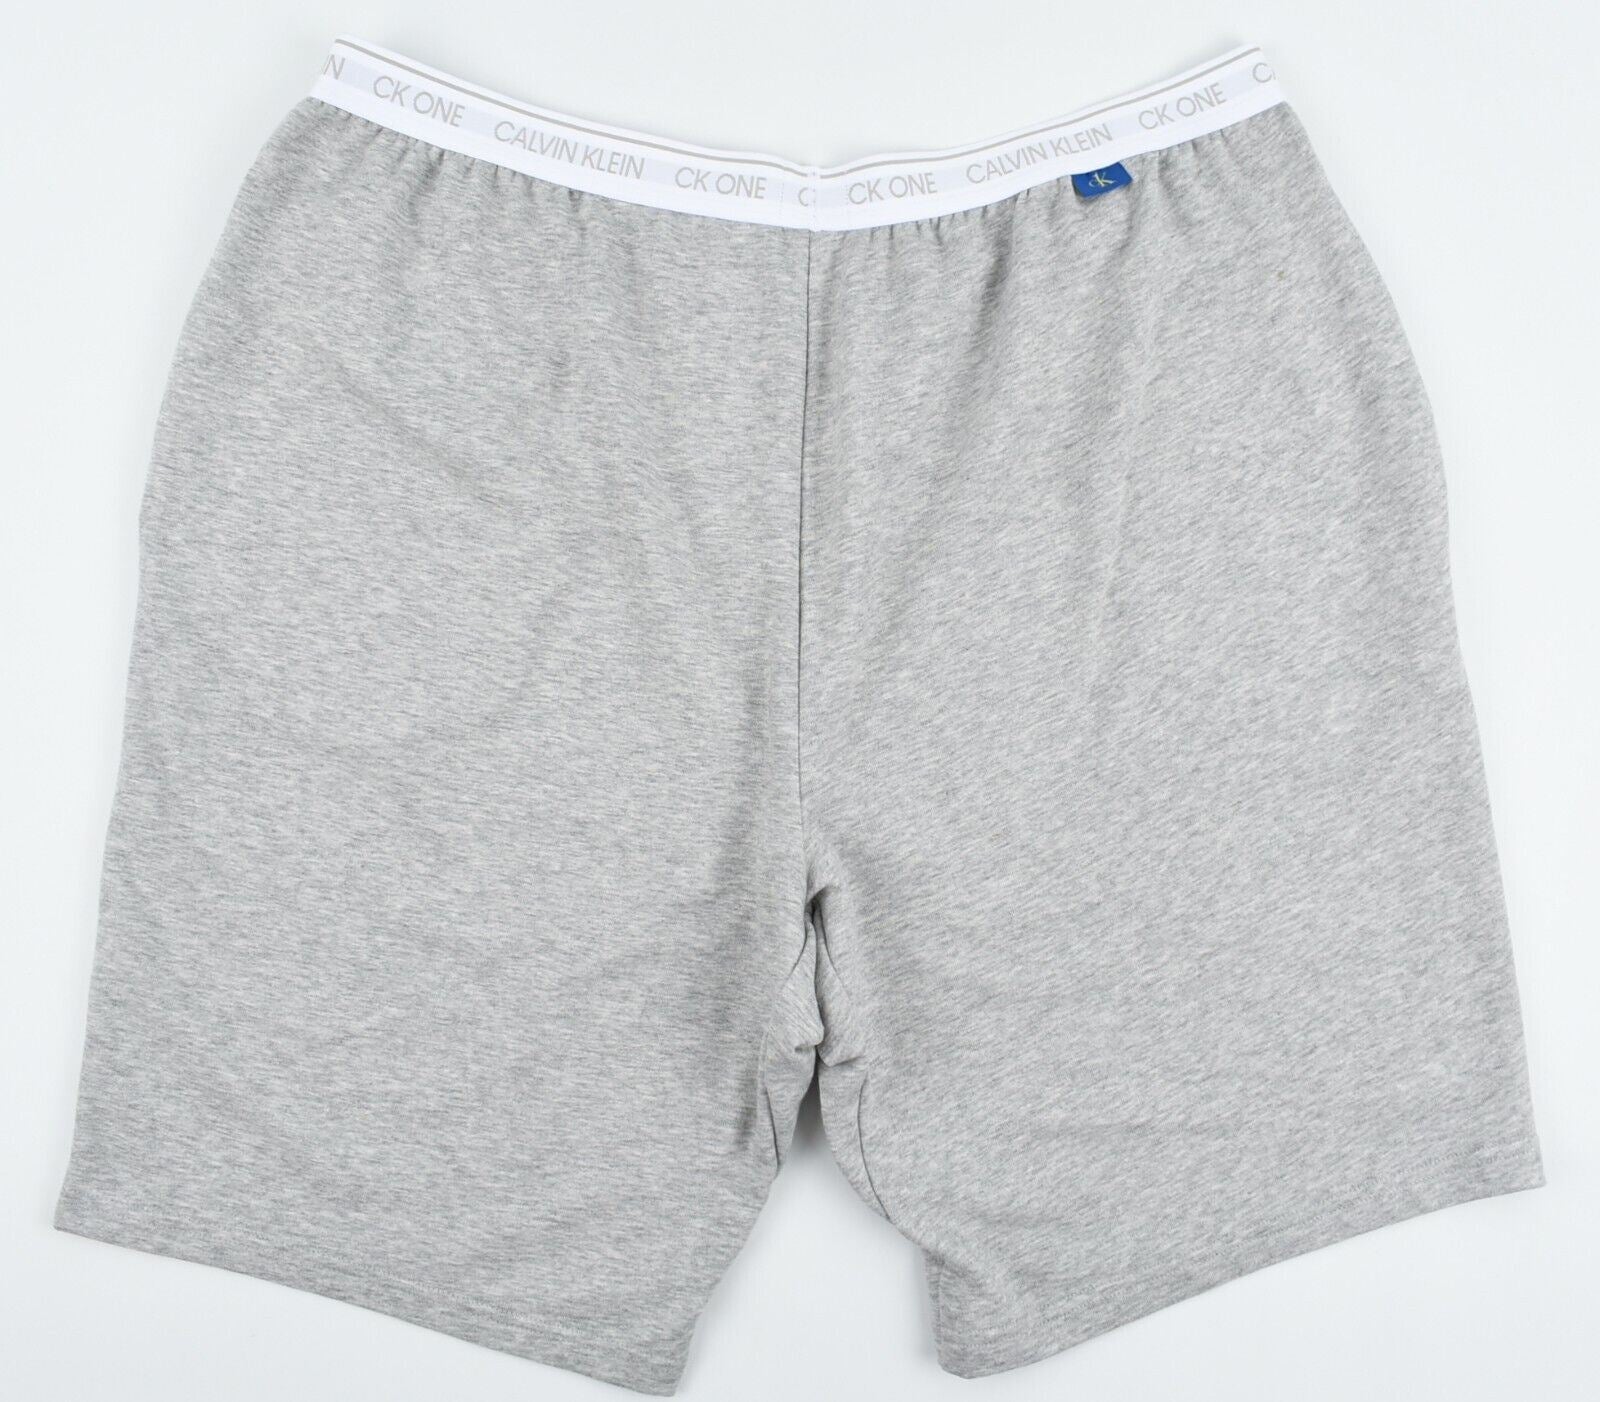 CALVIN KLEIN Sleepwear: CK ONE Men's Lounging Sweat Shorts, Grey, size XL